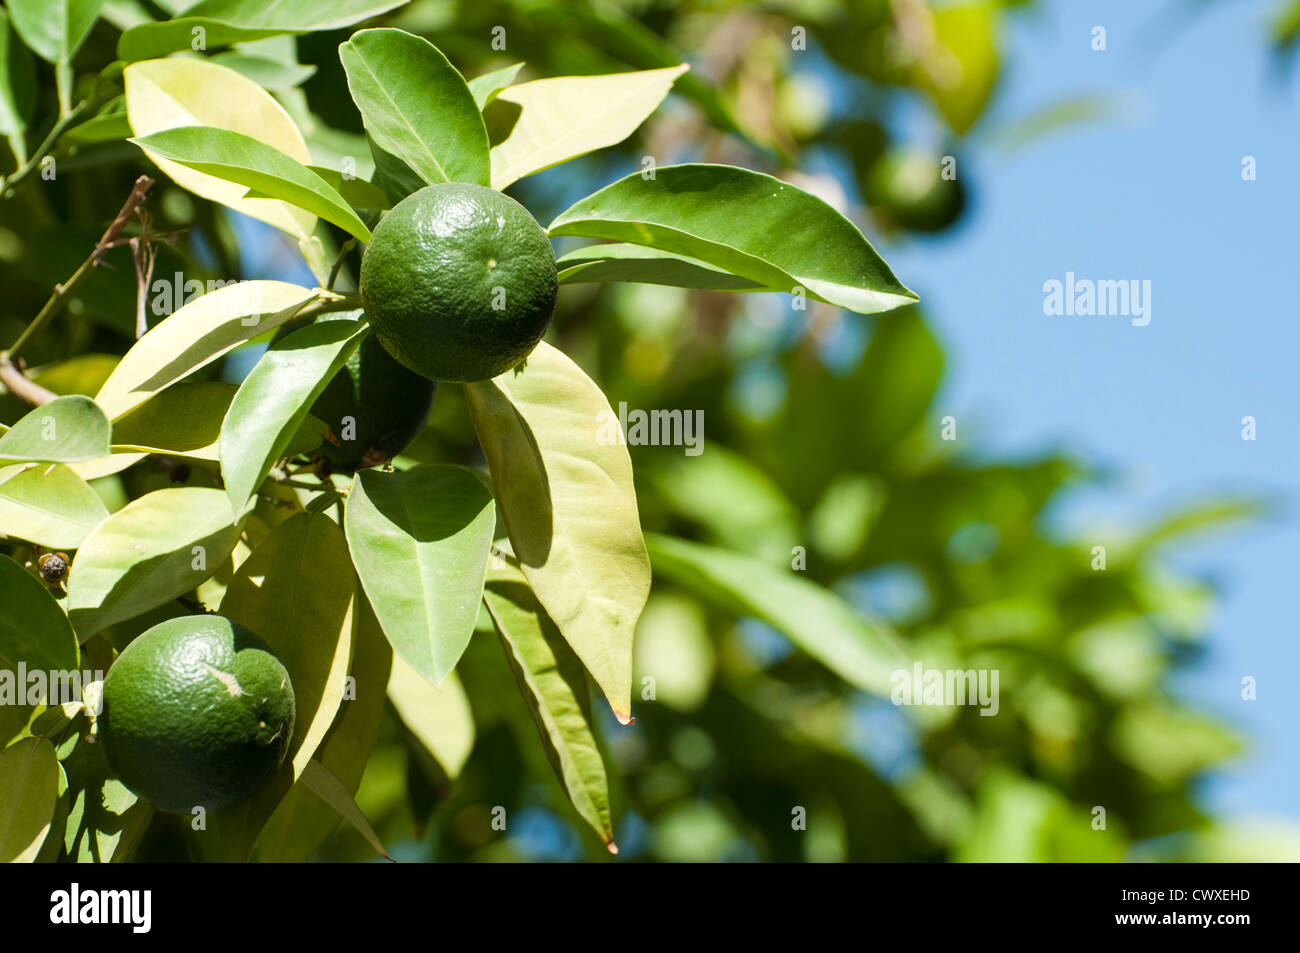 Green orange unripe fruit on branch Stock Photo